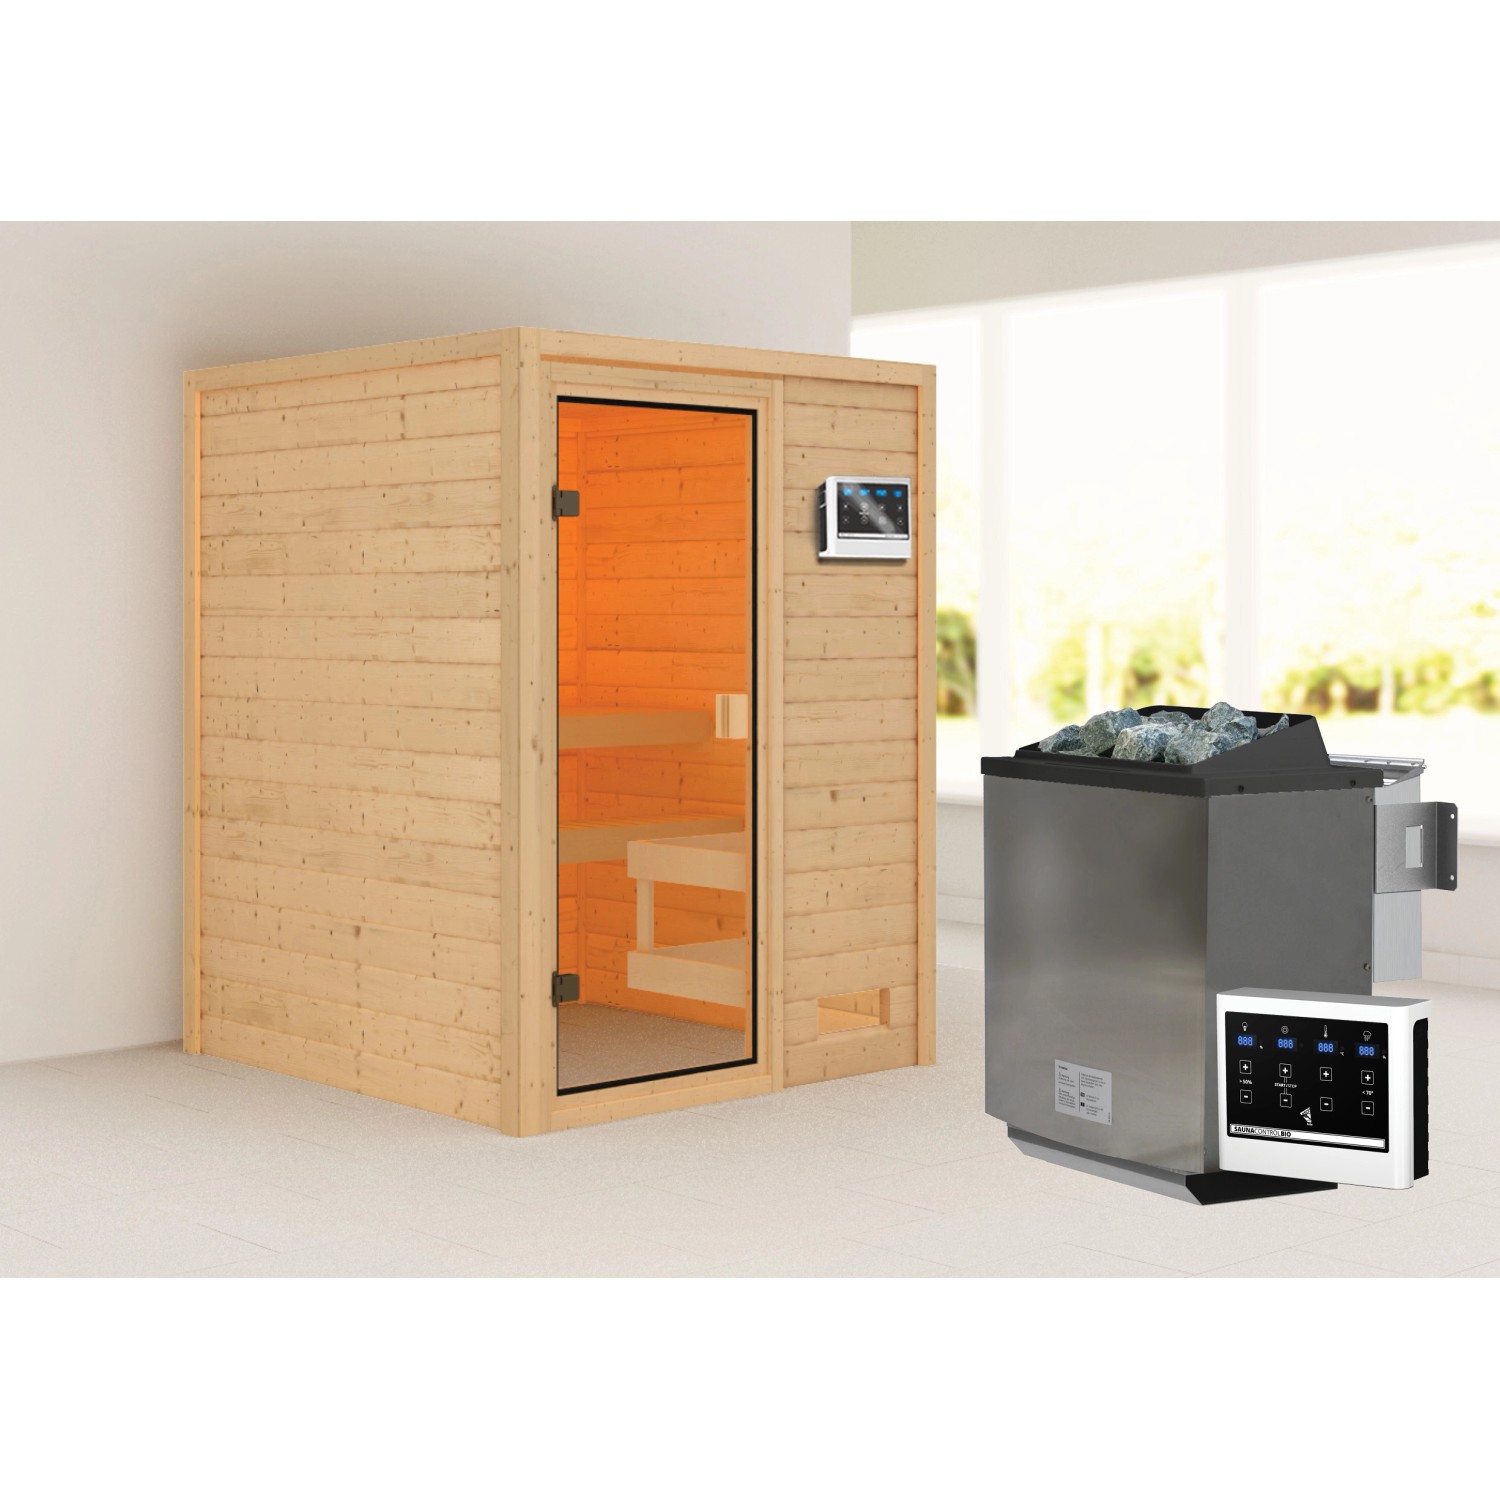 Woodfeeling Sauna Sandra inkl. 9 kW Bio-Ofen mit ext. Strg. Glastür von Woodfeeling